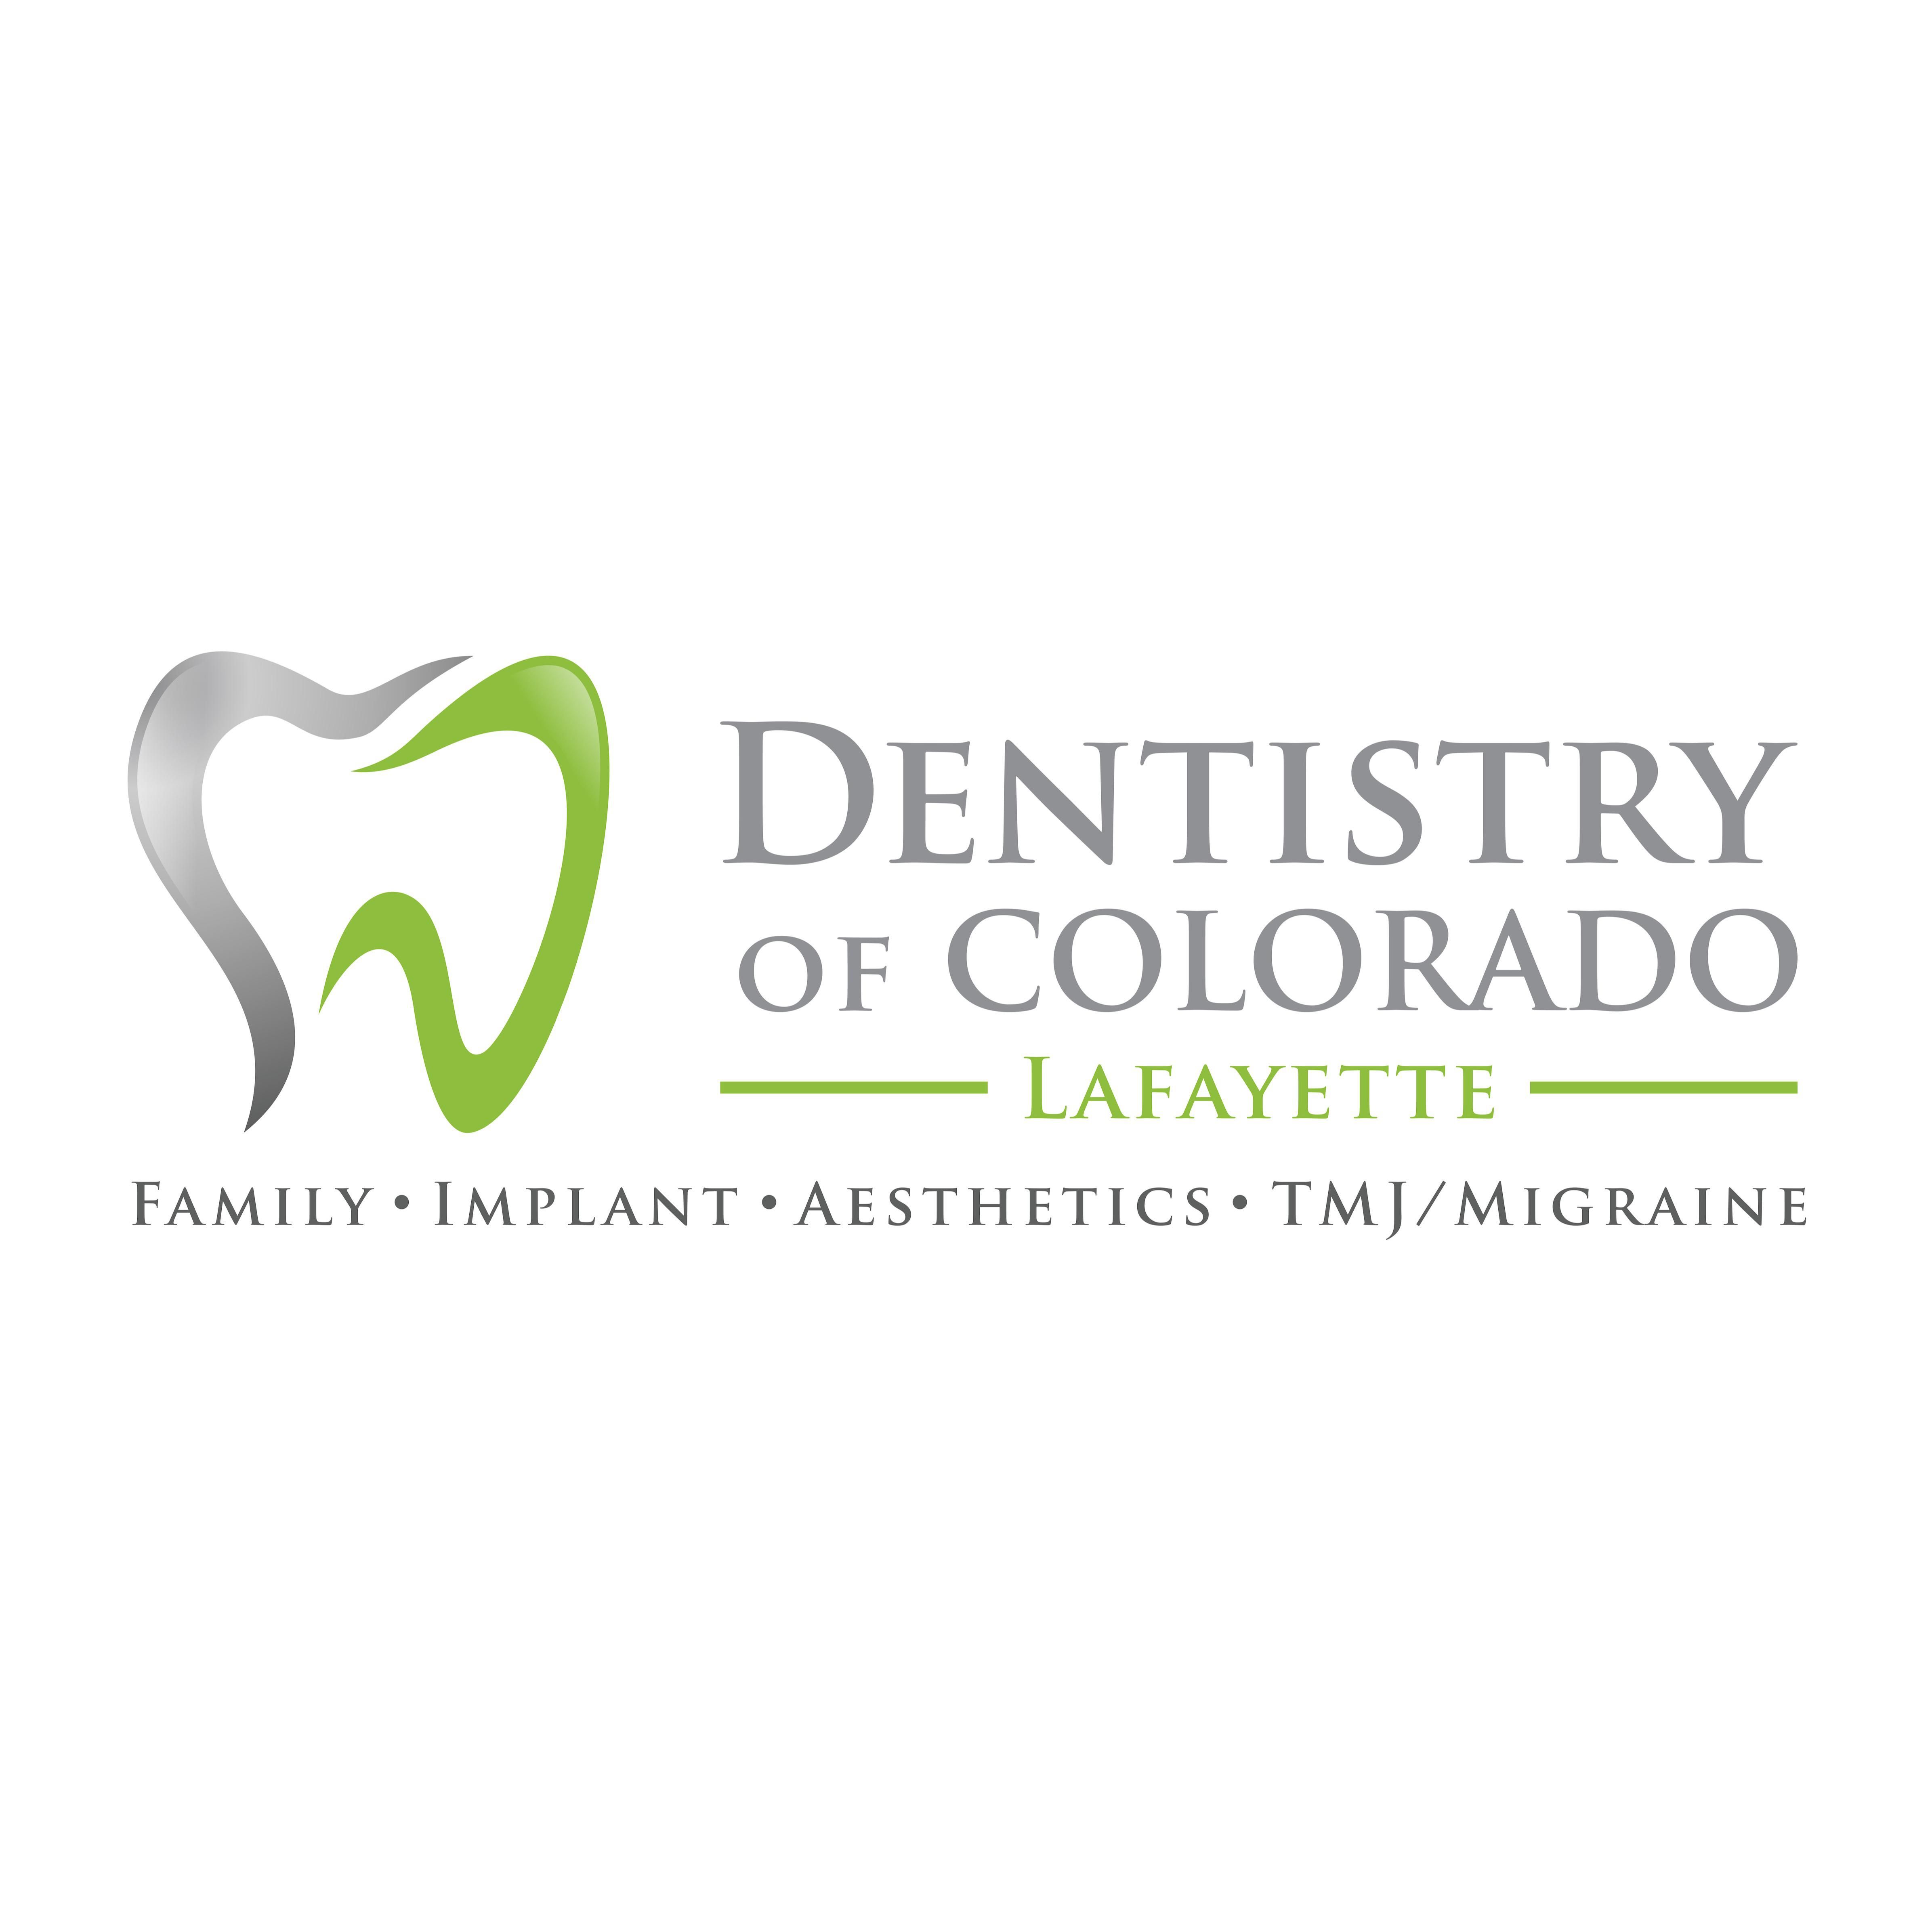 Dentistry of Colorado Lafayette